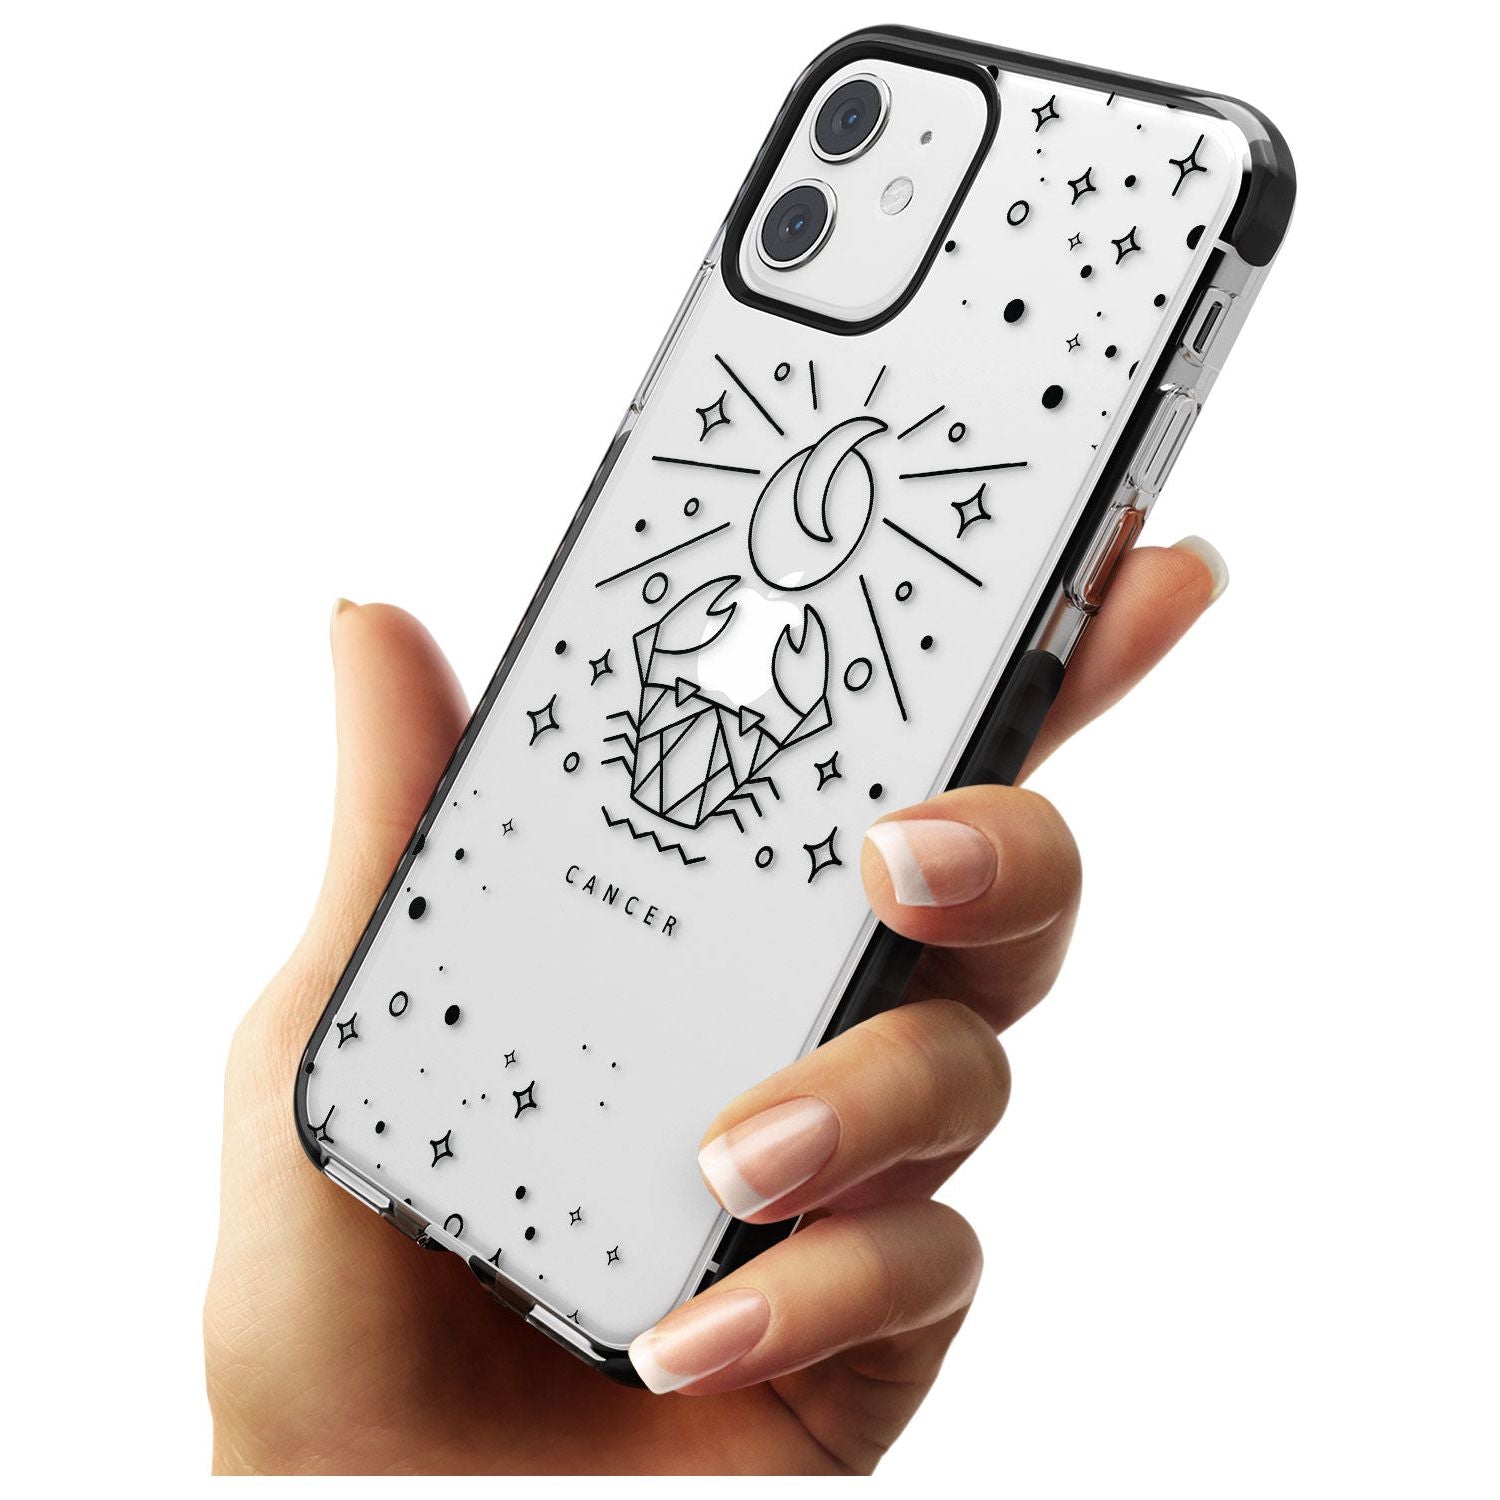 Cancer Emblem - Transparent Design Black Impact Phone Case for iPhone 11